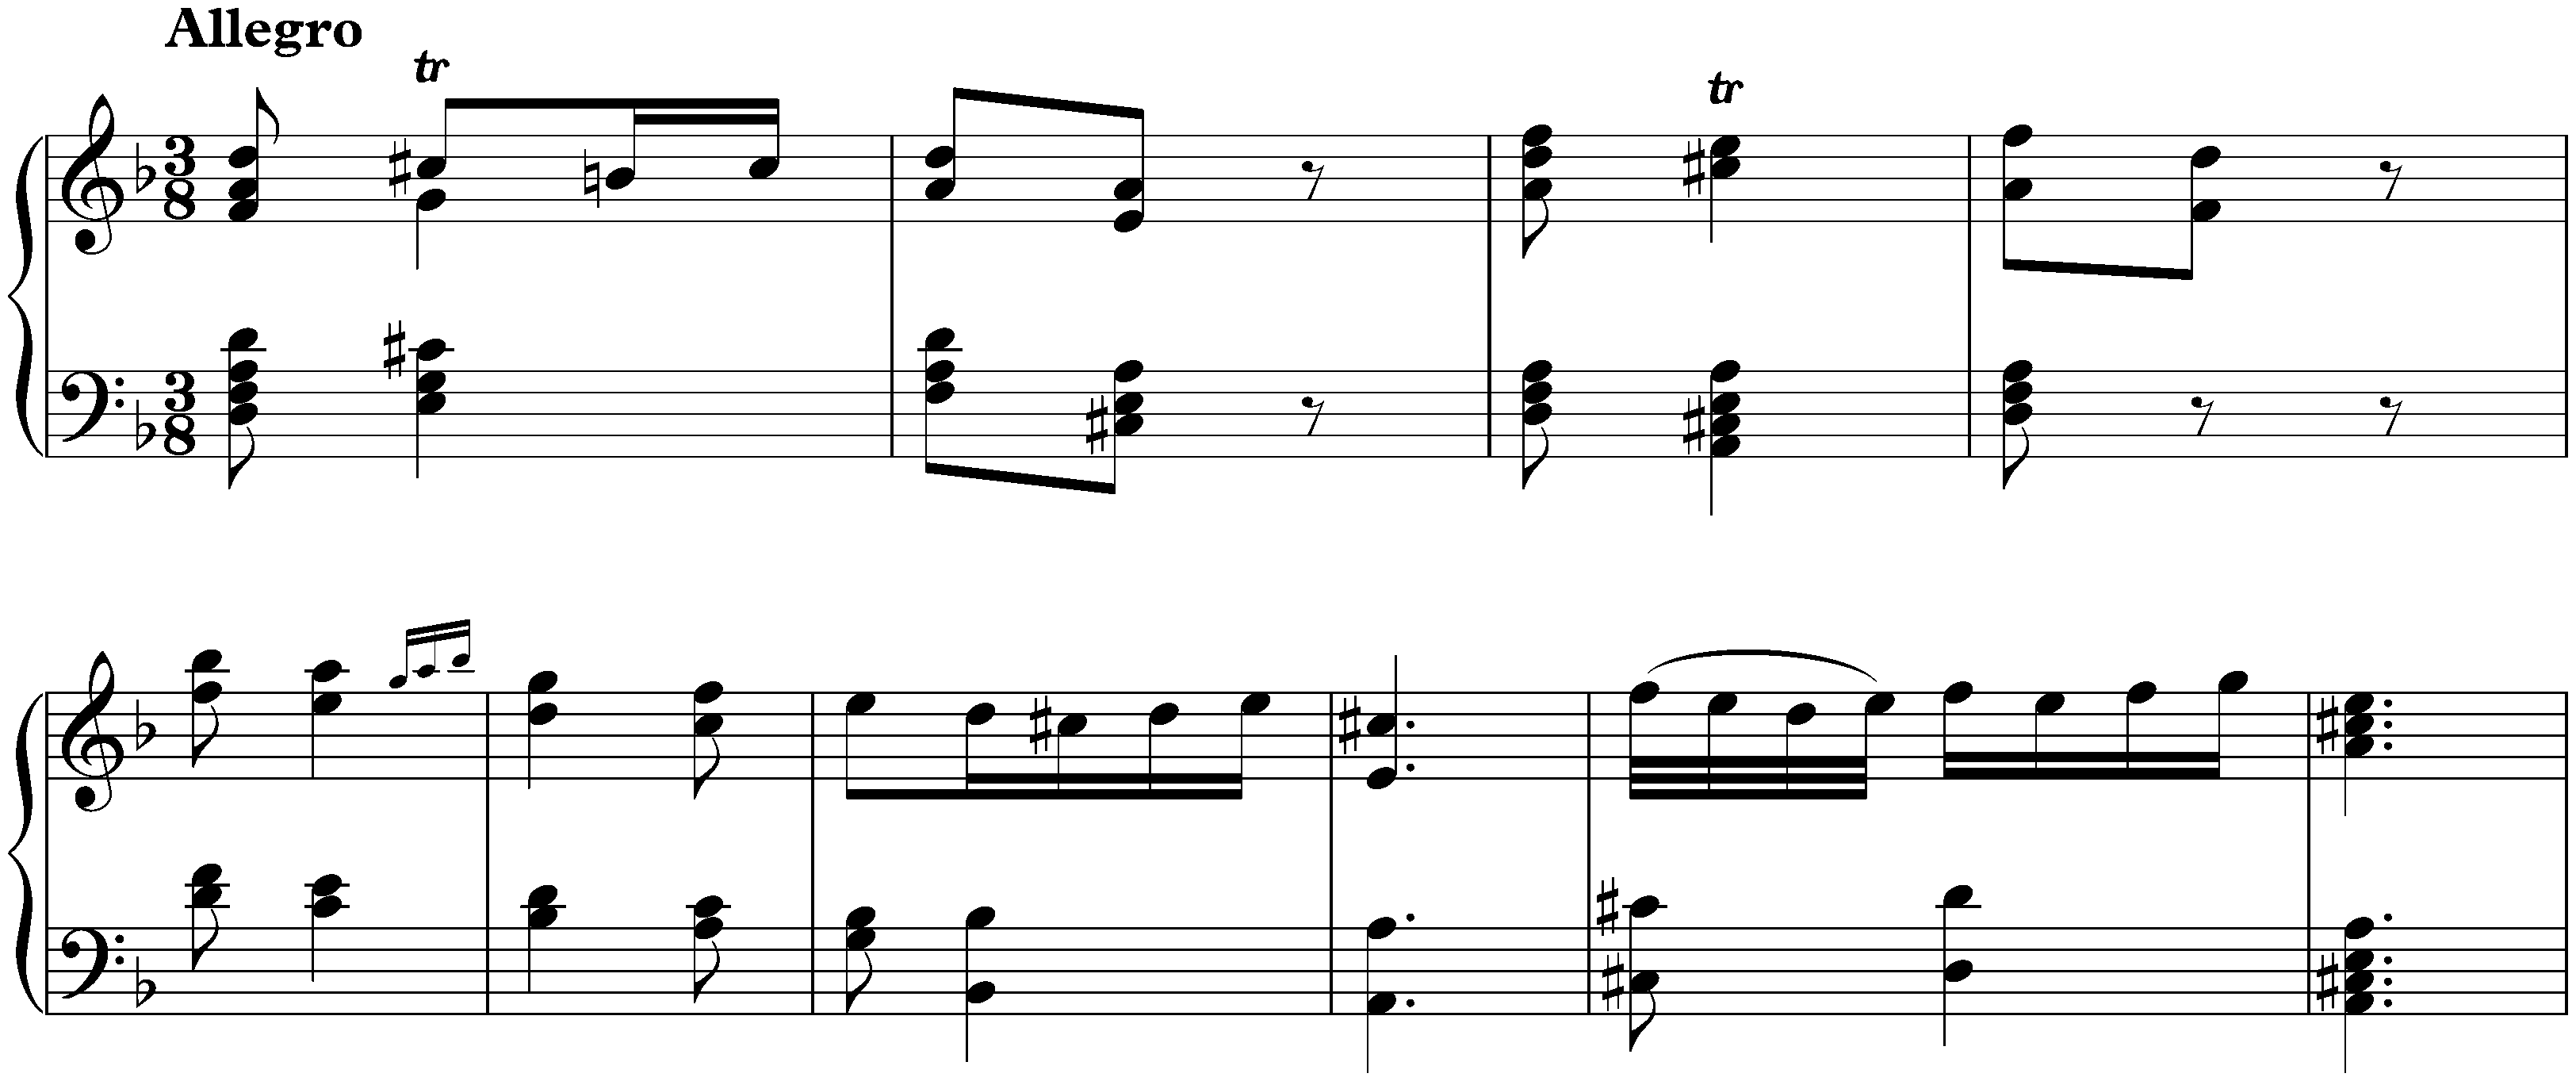 Suite in D minor, HWV 428; 6. Allegro (earlier version)